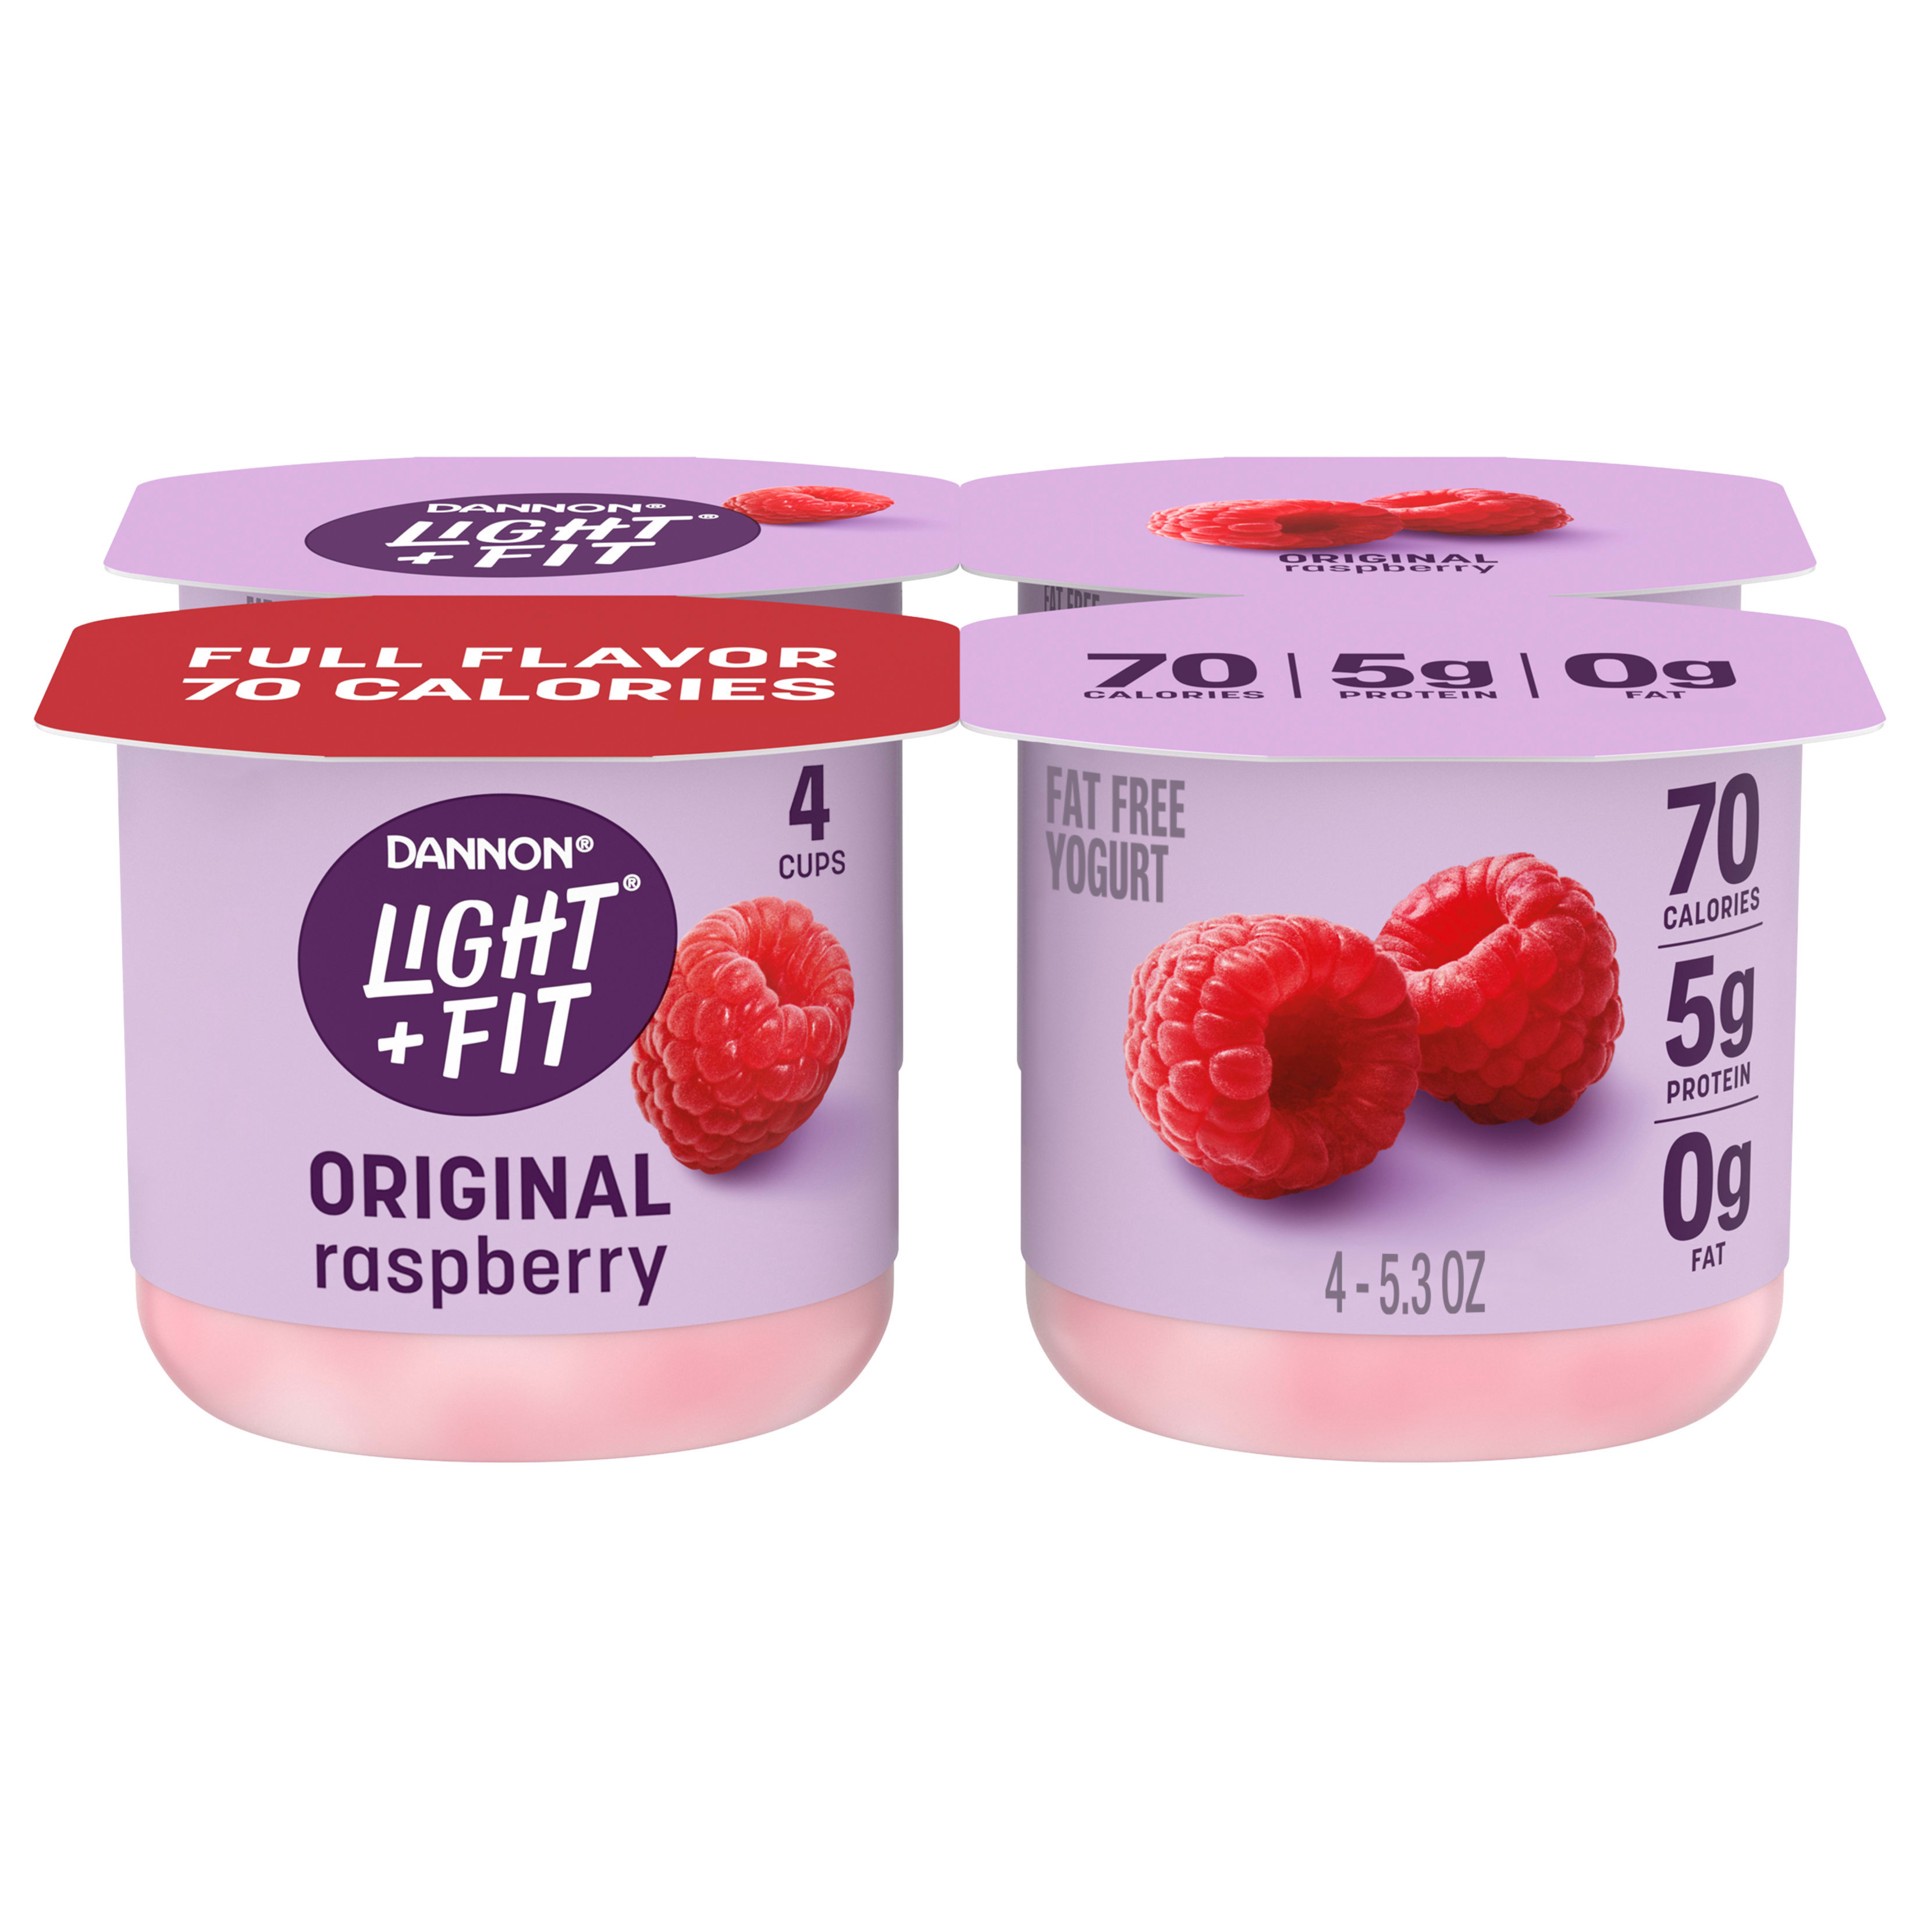 slide 1 of 5, Light + Fit Dannon Light + Fit Raspberry Original Nonfat Yogurt Pack, 0 Fat and 70 Calories, Creamy and Delicious Raspberry Yogurt, 4 Ct, 5.3 OZ Cups, 5.3 oz